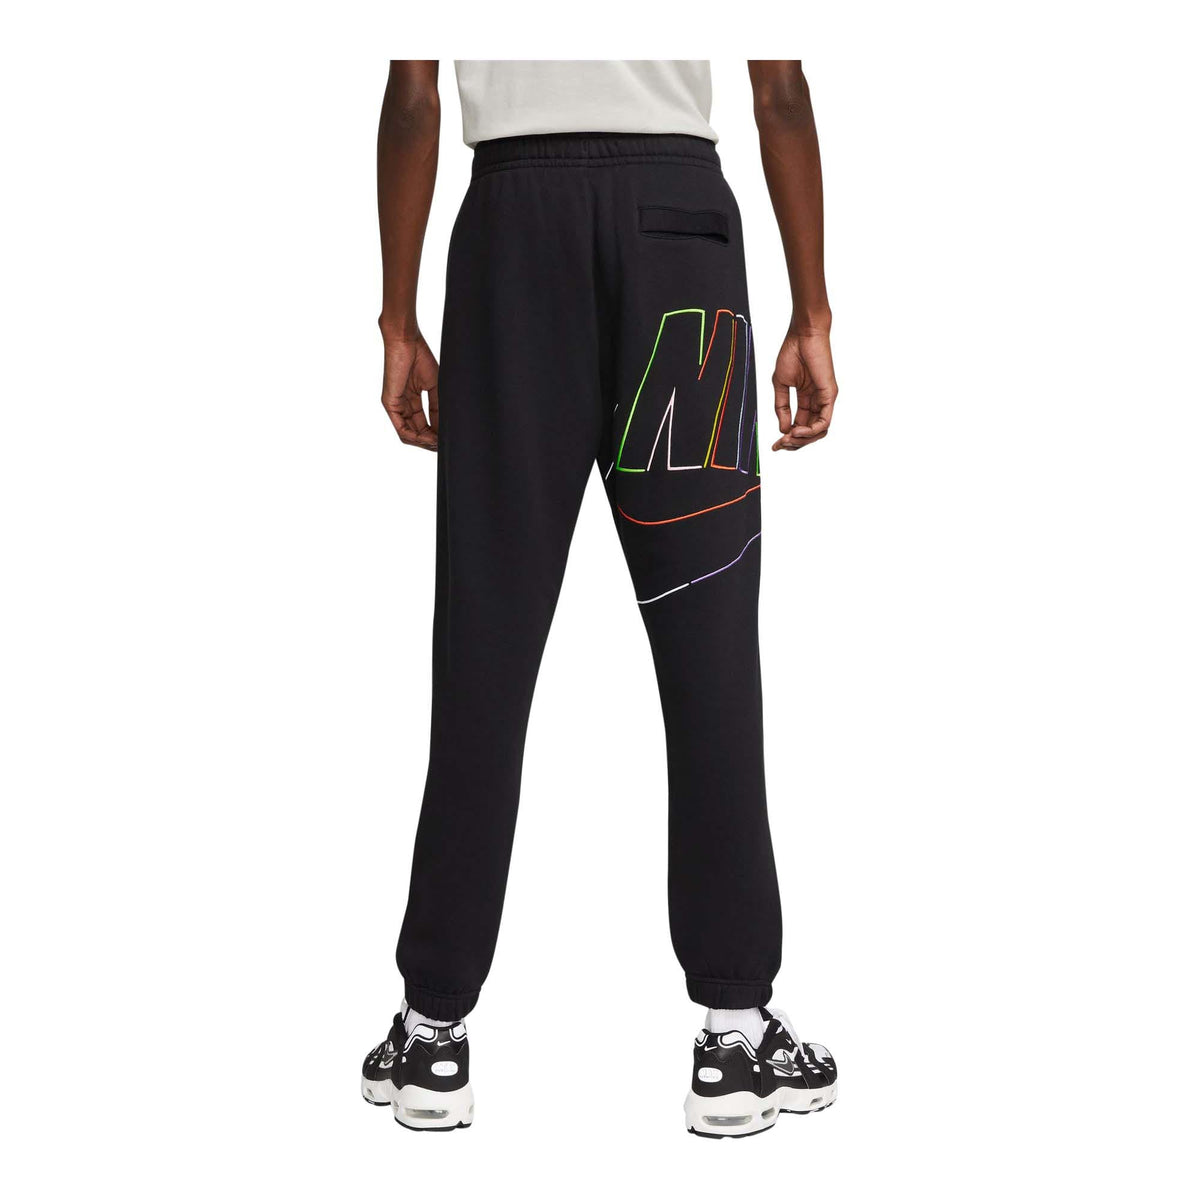 Men's Nike White/Black Sportswear Swoosh Tech Fleece Pants - 2XL